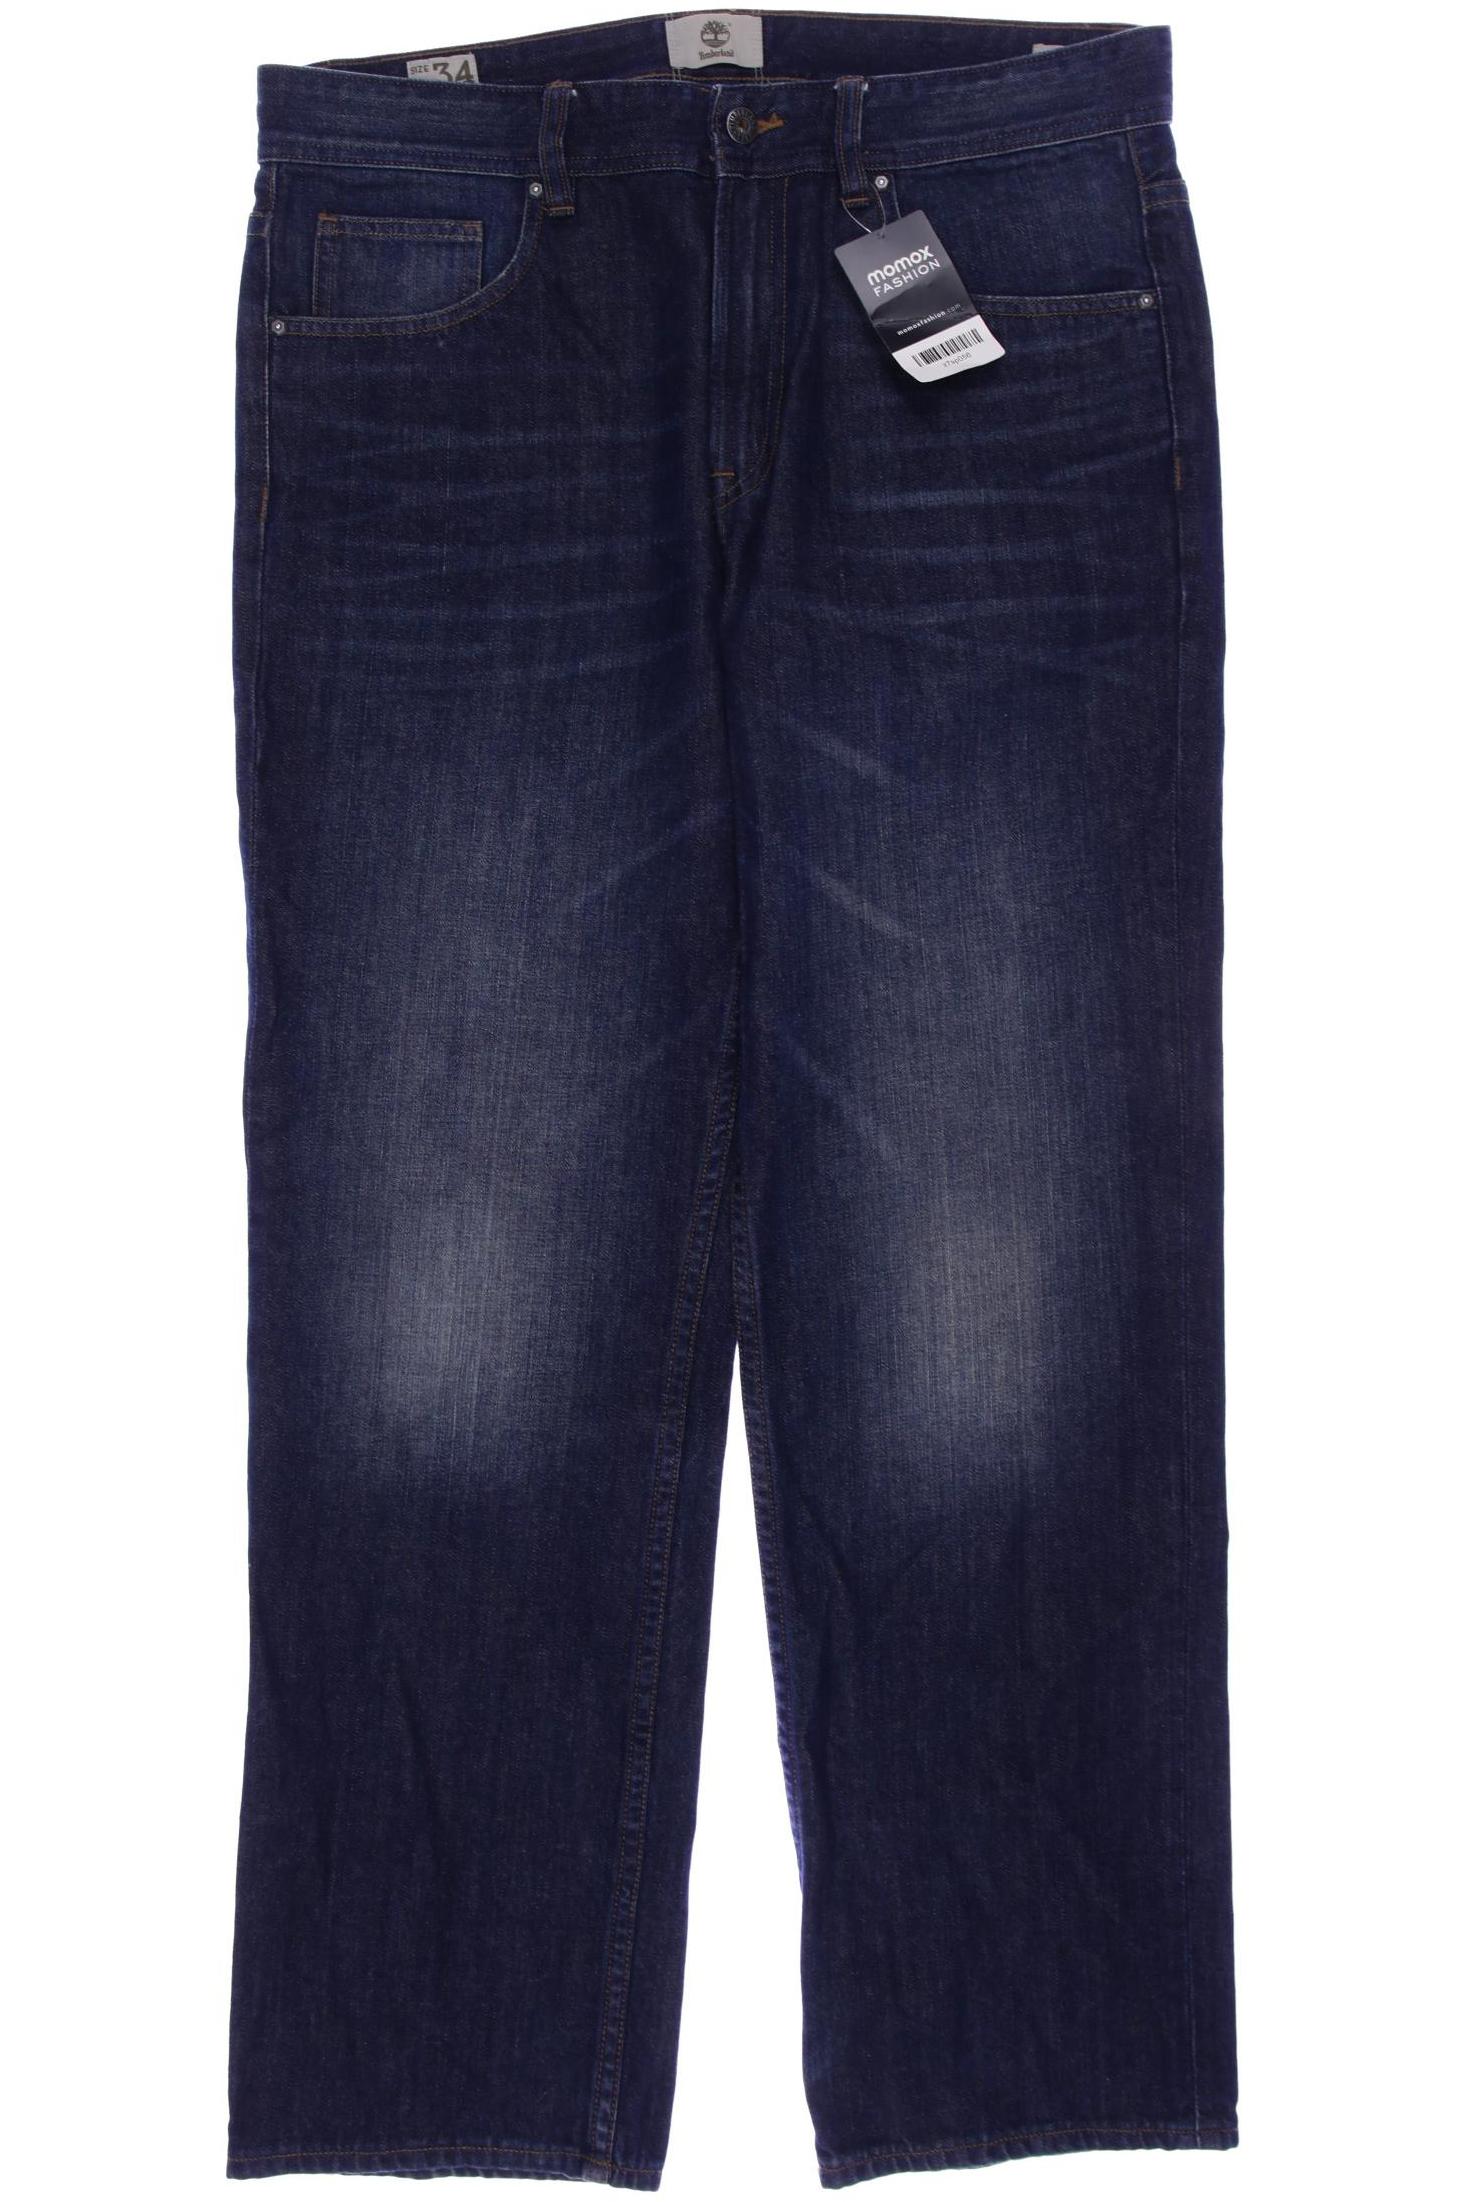 Timberland Herren Jeans, marineblau von Timberland